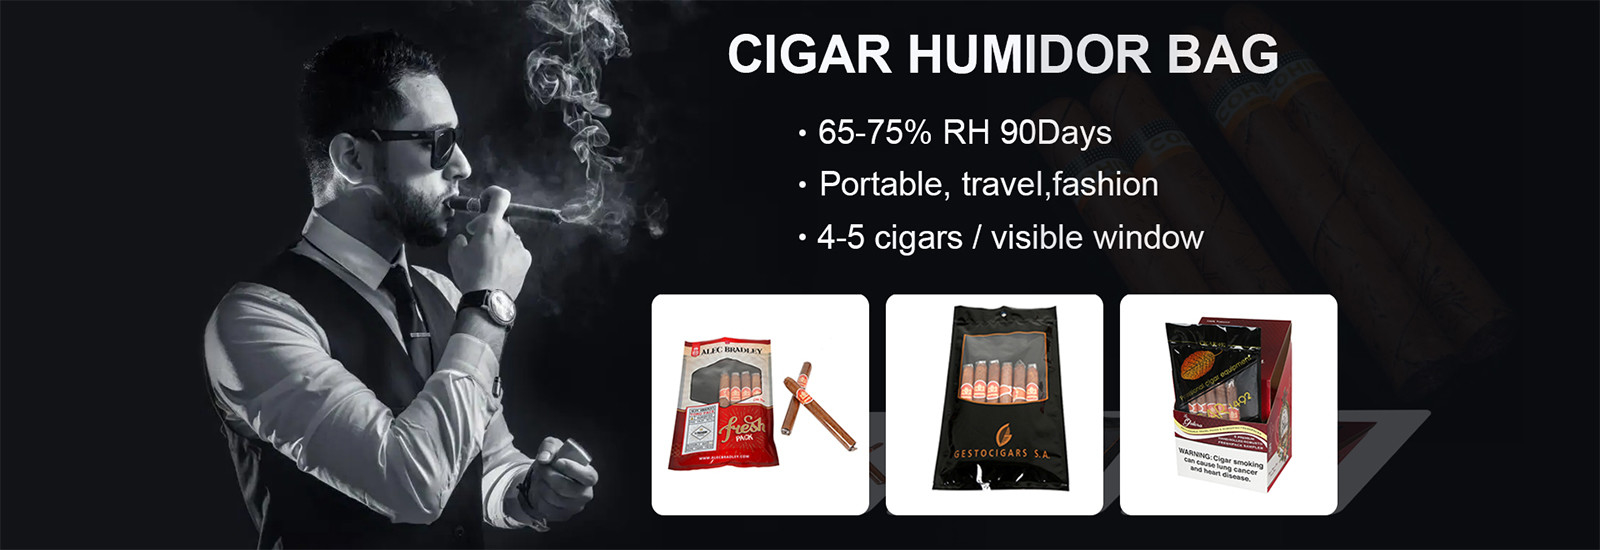 کیسه Humidor سیگار